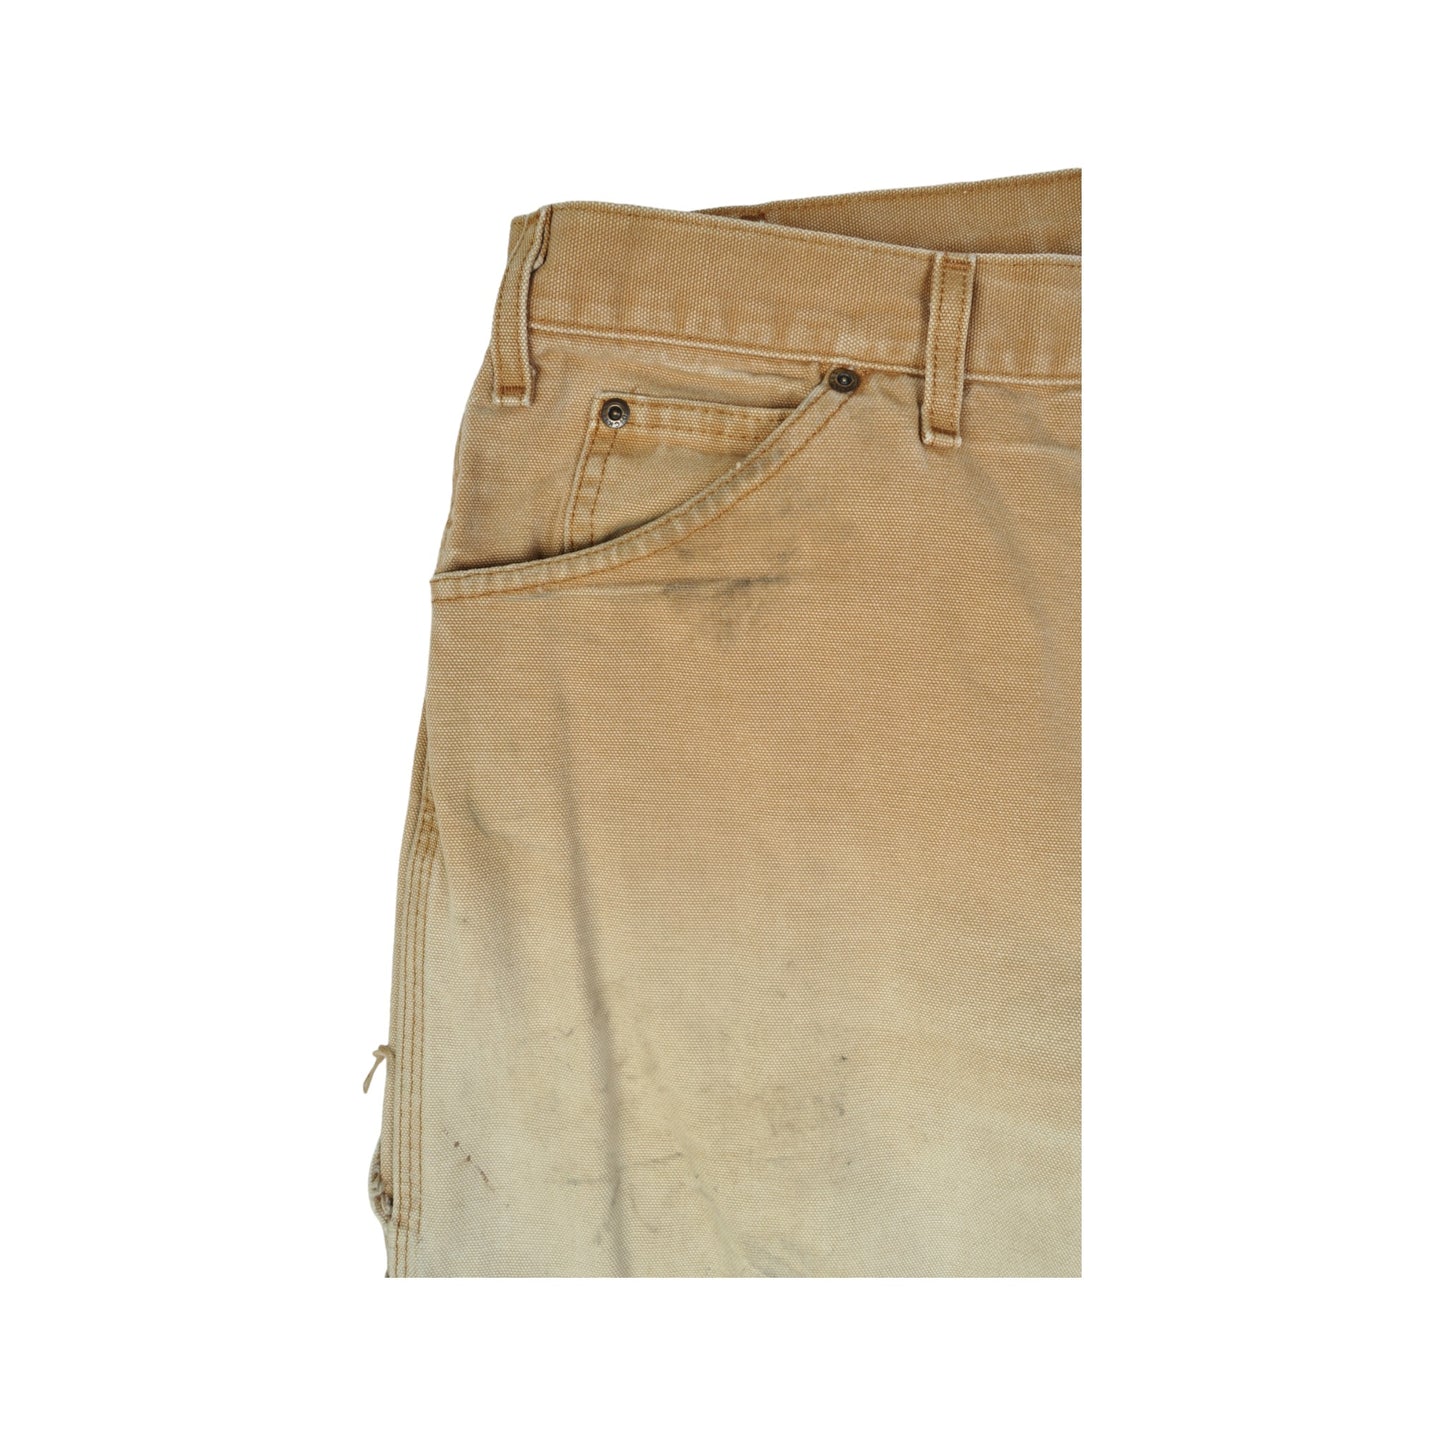 Vintage Dickies Carpenter Pants Tan W36 L34